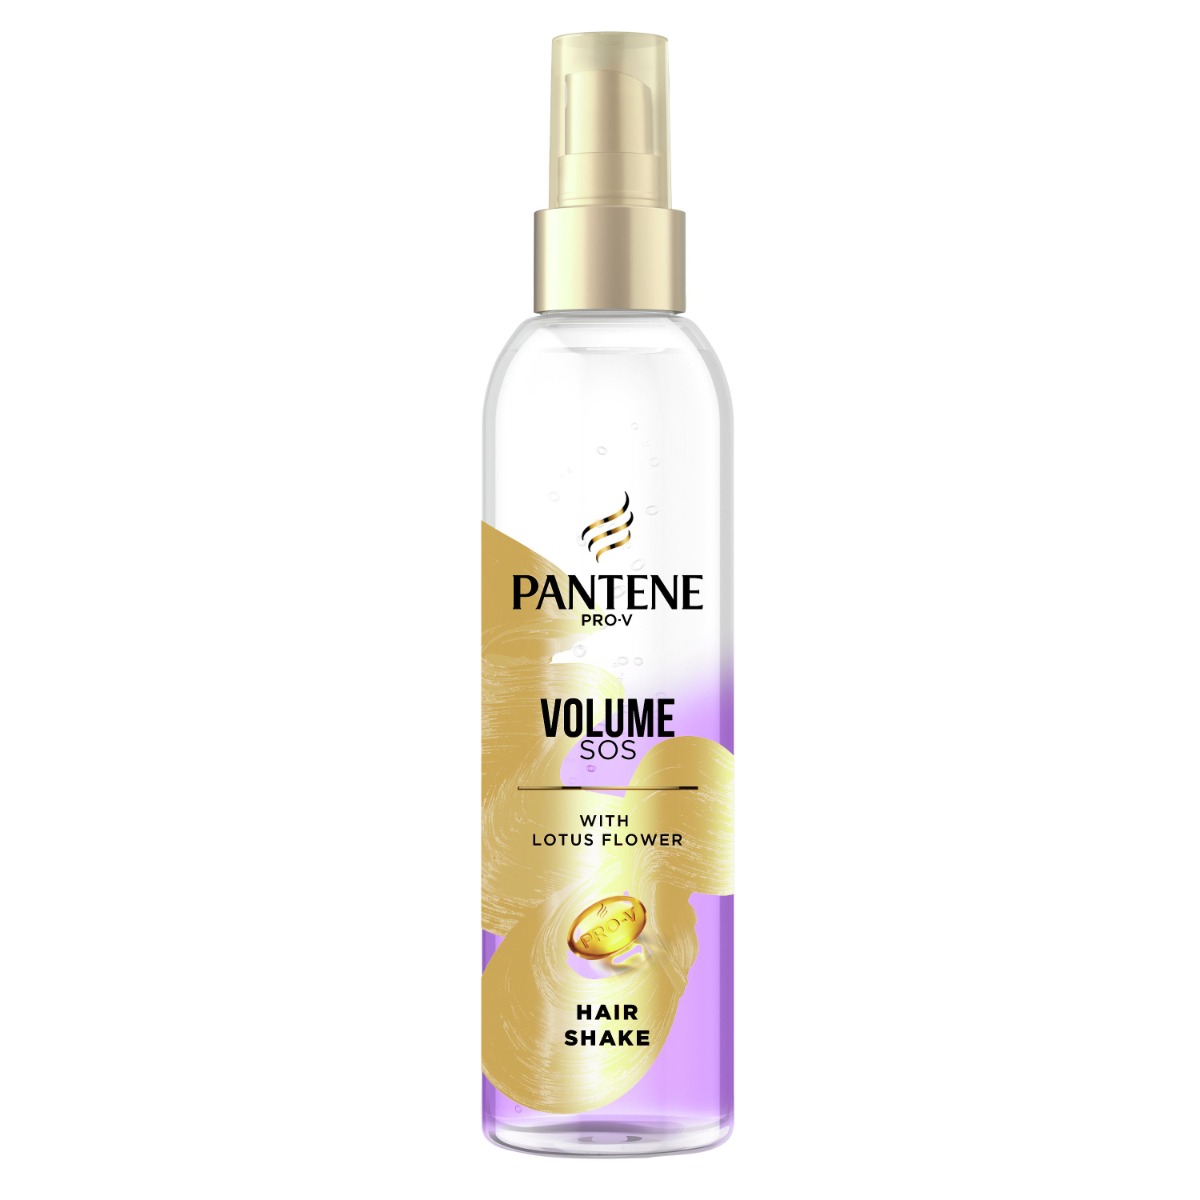 Pantene Pro-V SOS Volume Lotosový květ sprej na vlasy 150 ml Pantene Pro-V